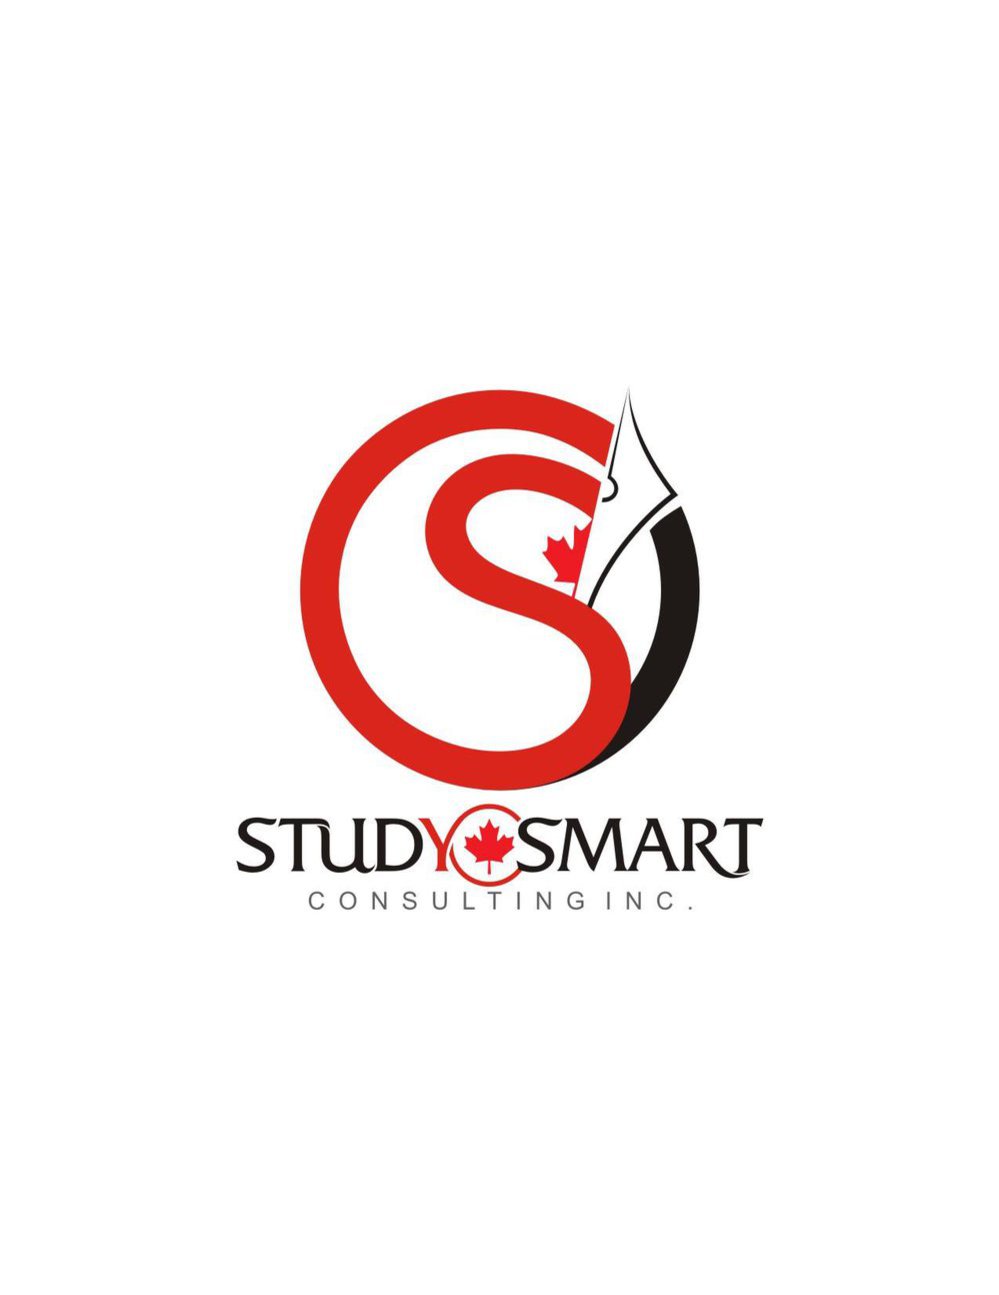 Studysmart Consulting Inc - Consultants in Kochi, Kerala cover